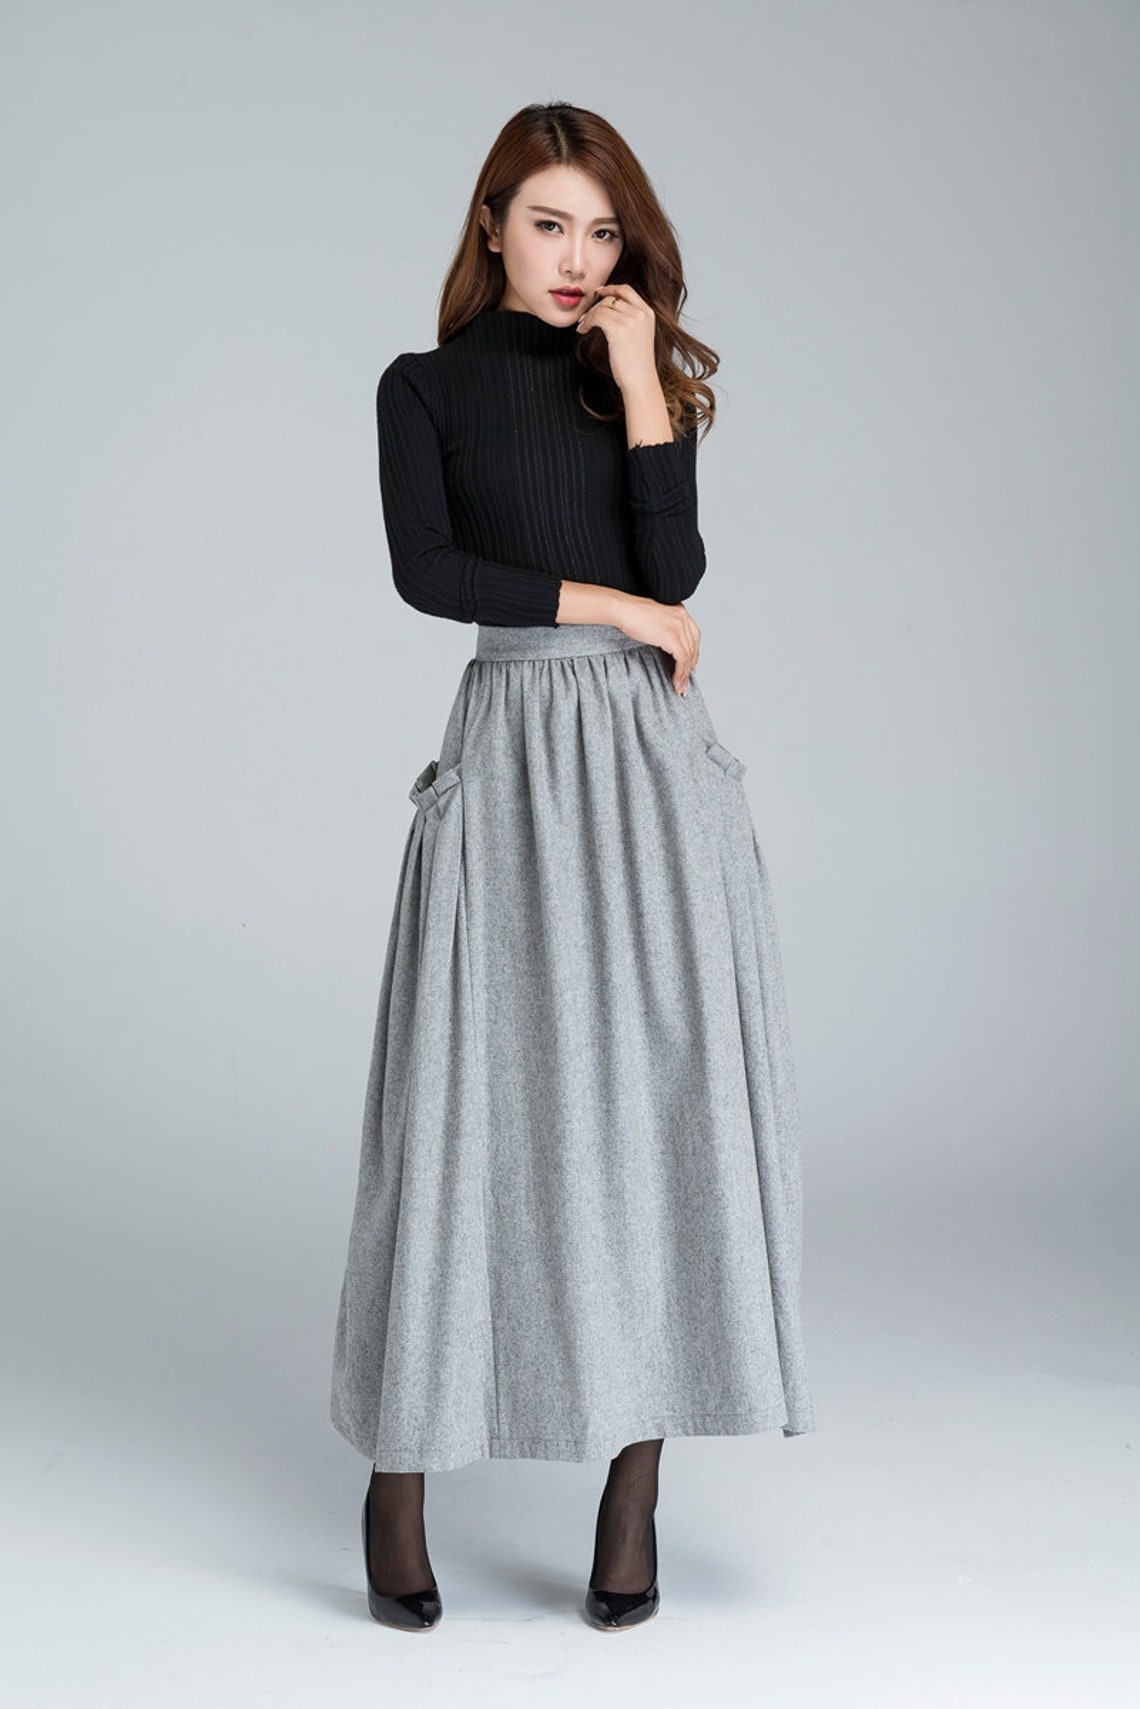 Wool maxi skirt light grey skirt womens skirts with pocket | Etsy